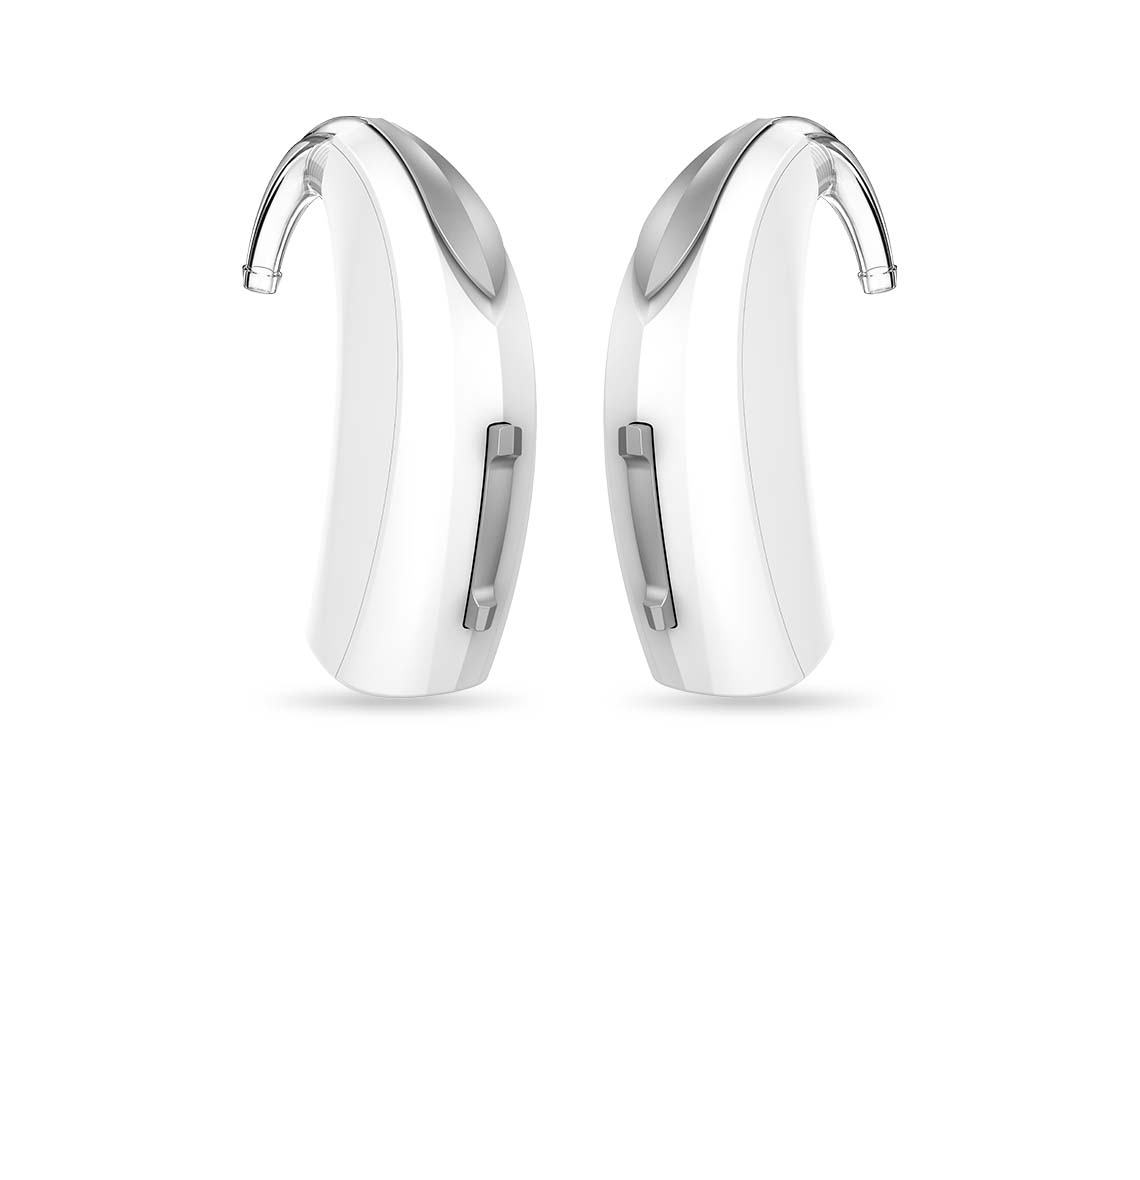 A pair of Power Plus BTE 13 hearing aids